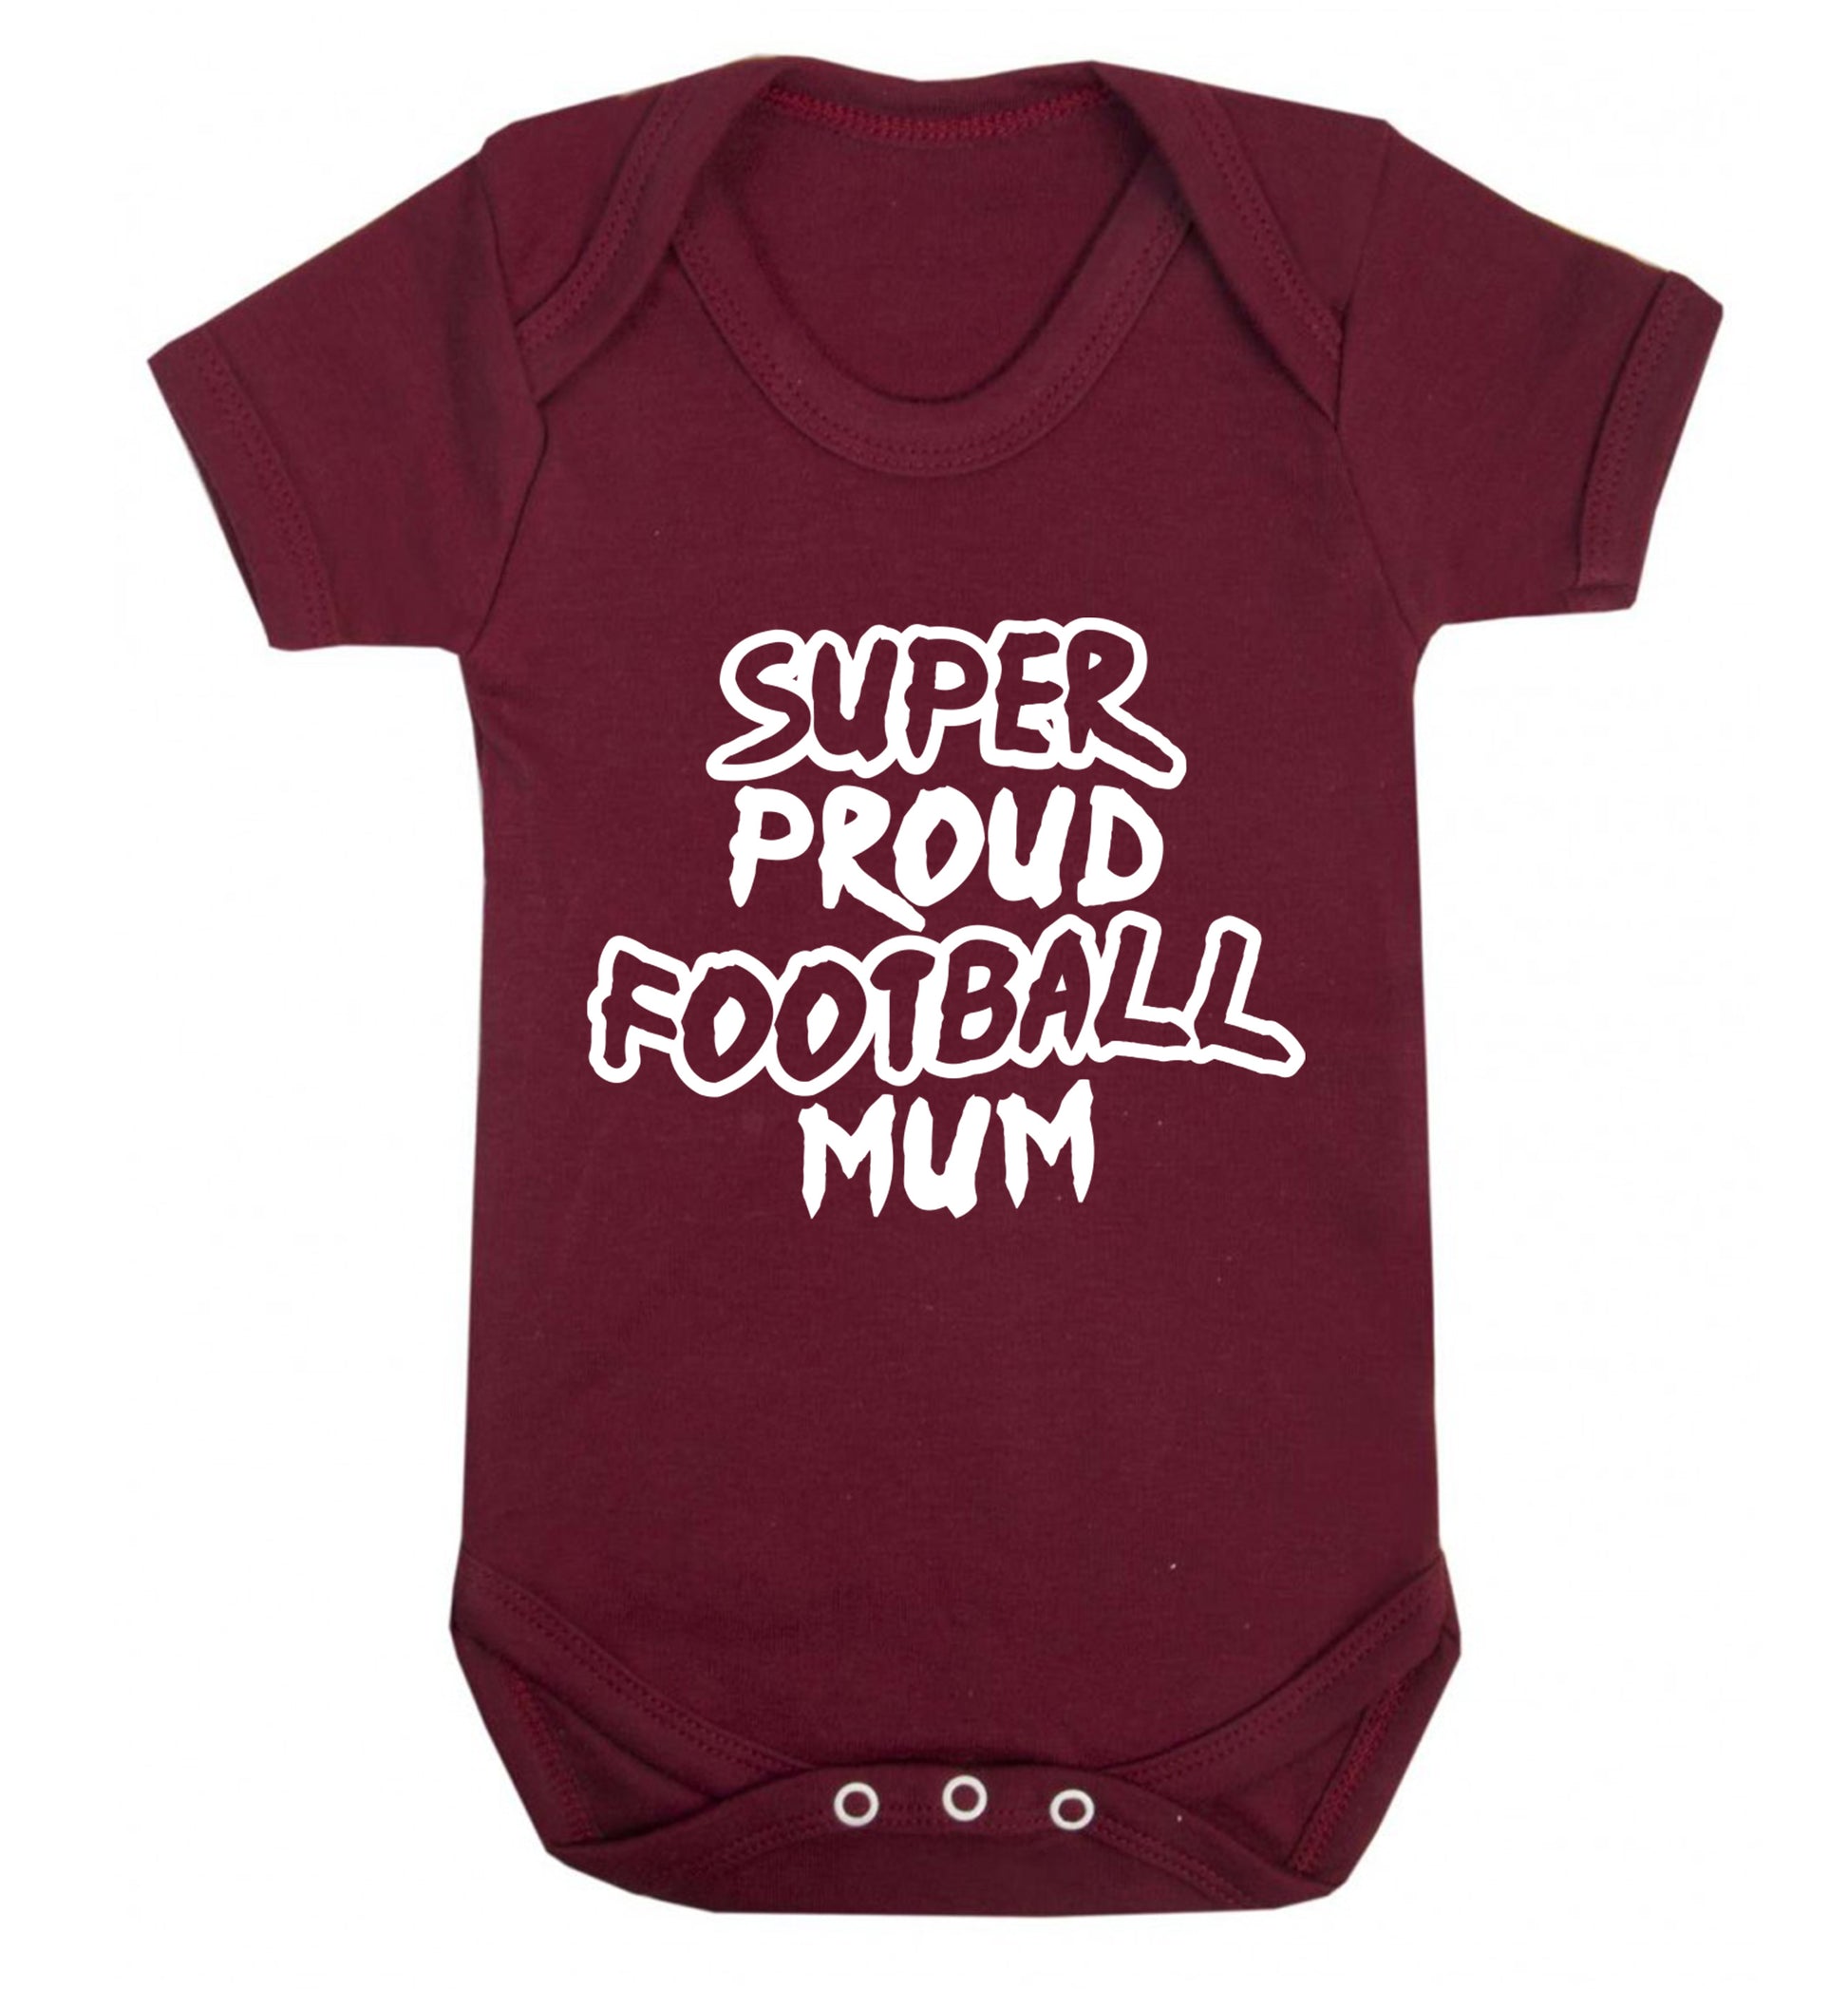 Super proud football mum Baby Vest maroon 18-24 months